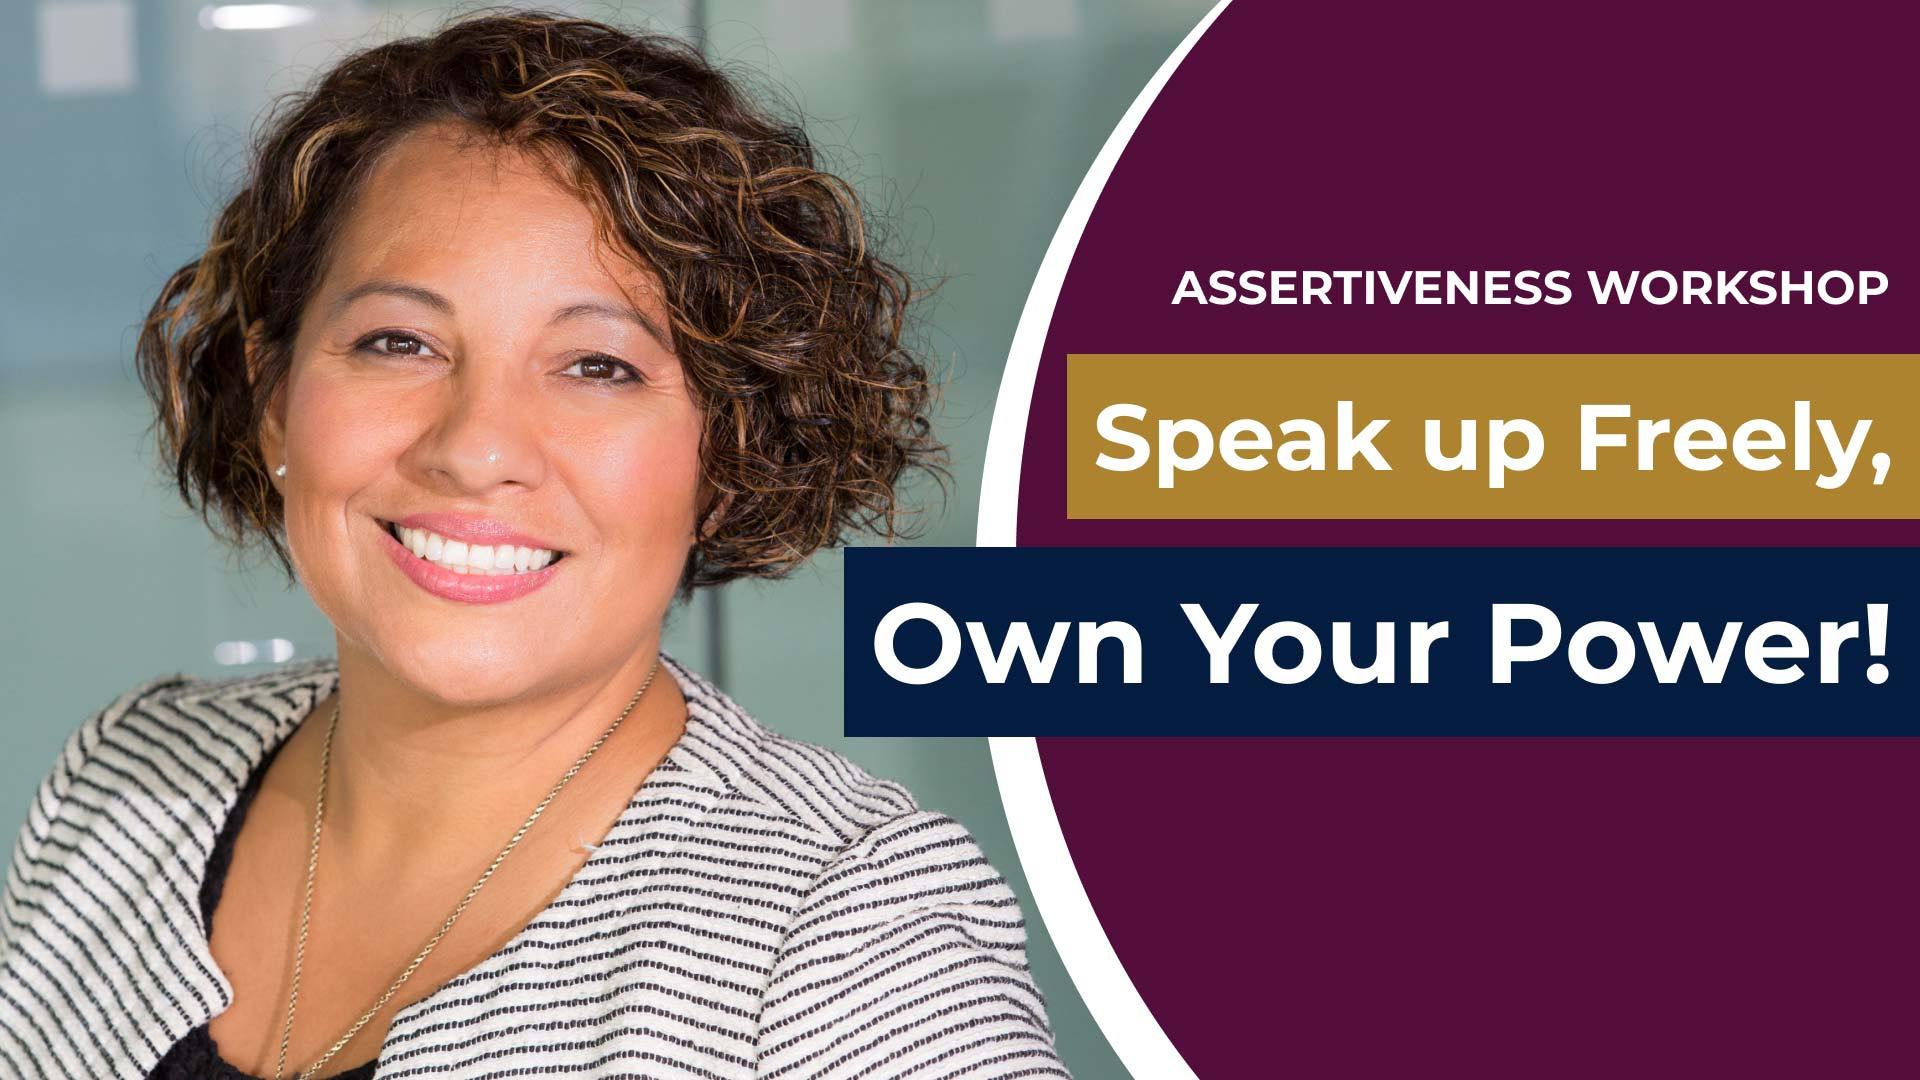 Assertiveness Workshop: Speak up Freely, Own Your Power!